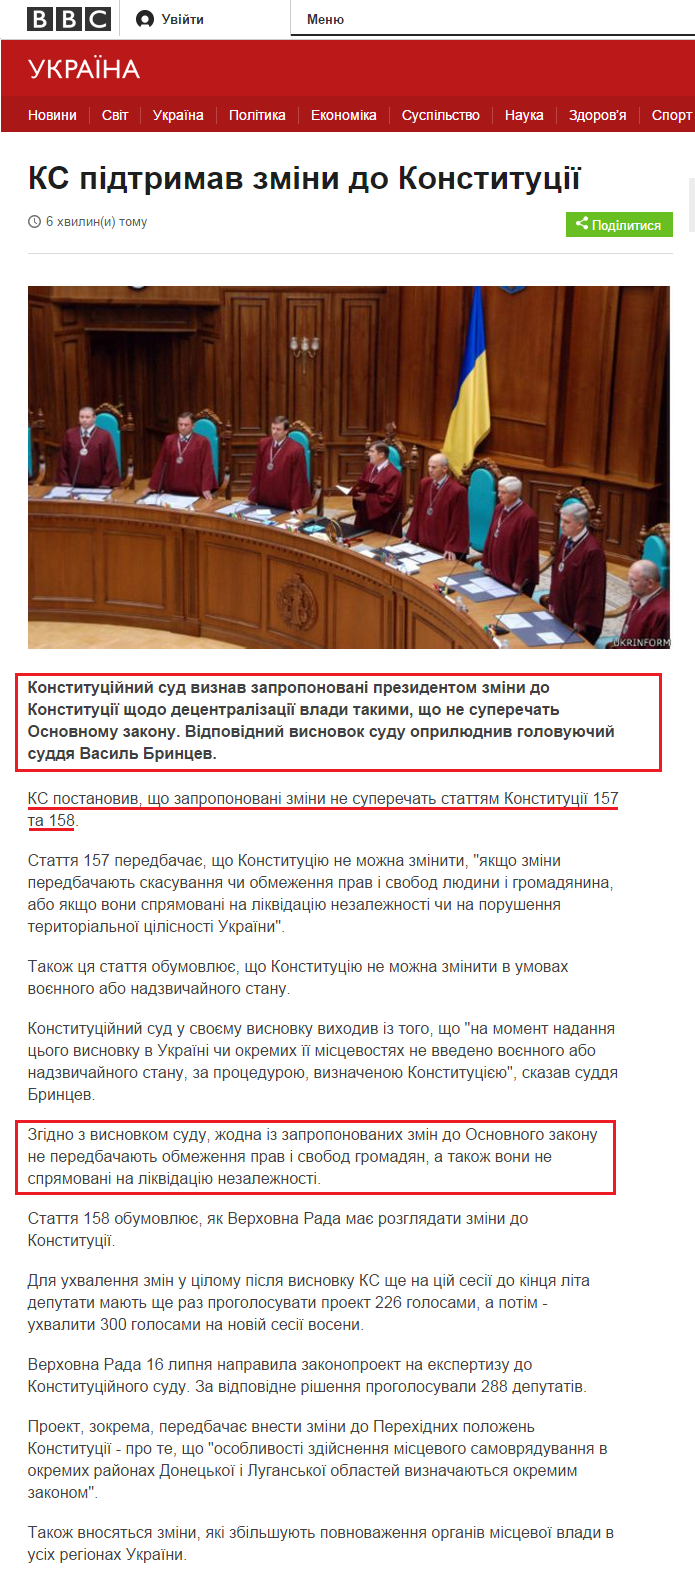 http://www.bbc.com/ukrainian/news_in_brief/2015/07/150731_she_constitution_changes_court.shtml?ocid=socialflow_facebook